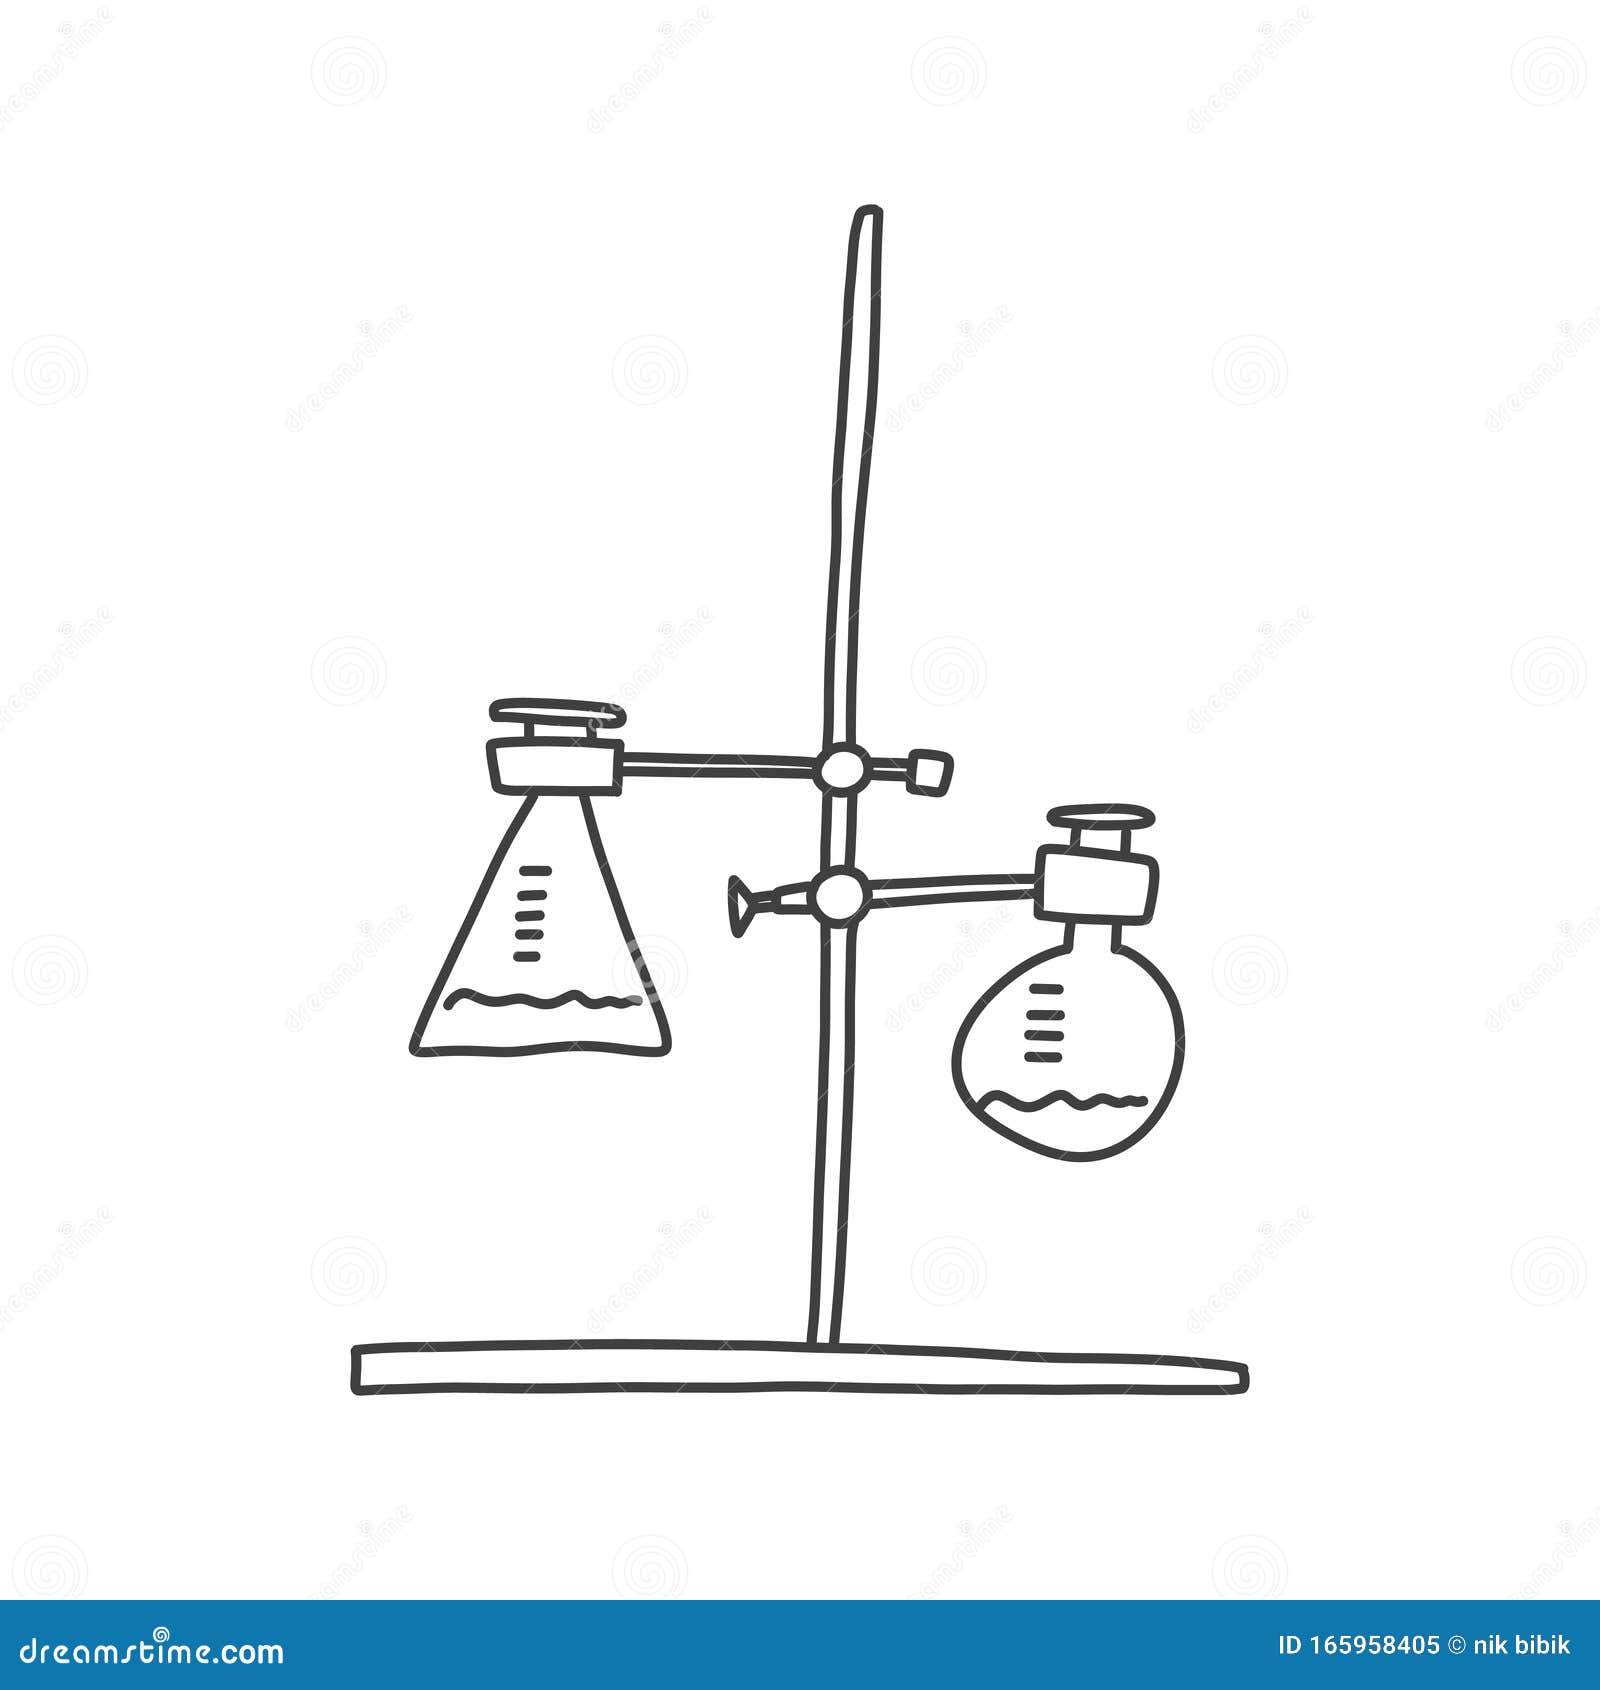 Drawn Sketch, Chemistry Tube, Experiment Holder Stock Illustration -  Illustration of liquid, biochemistry: 165958405